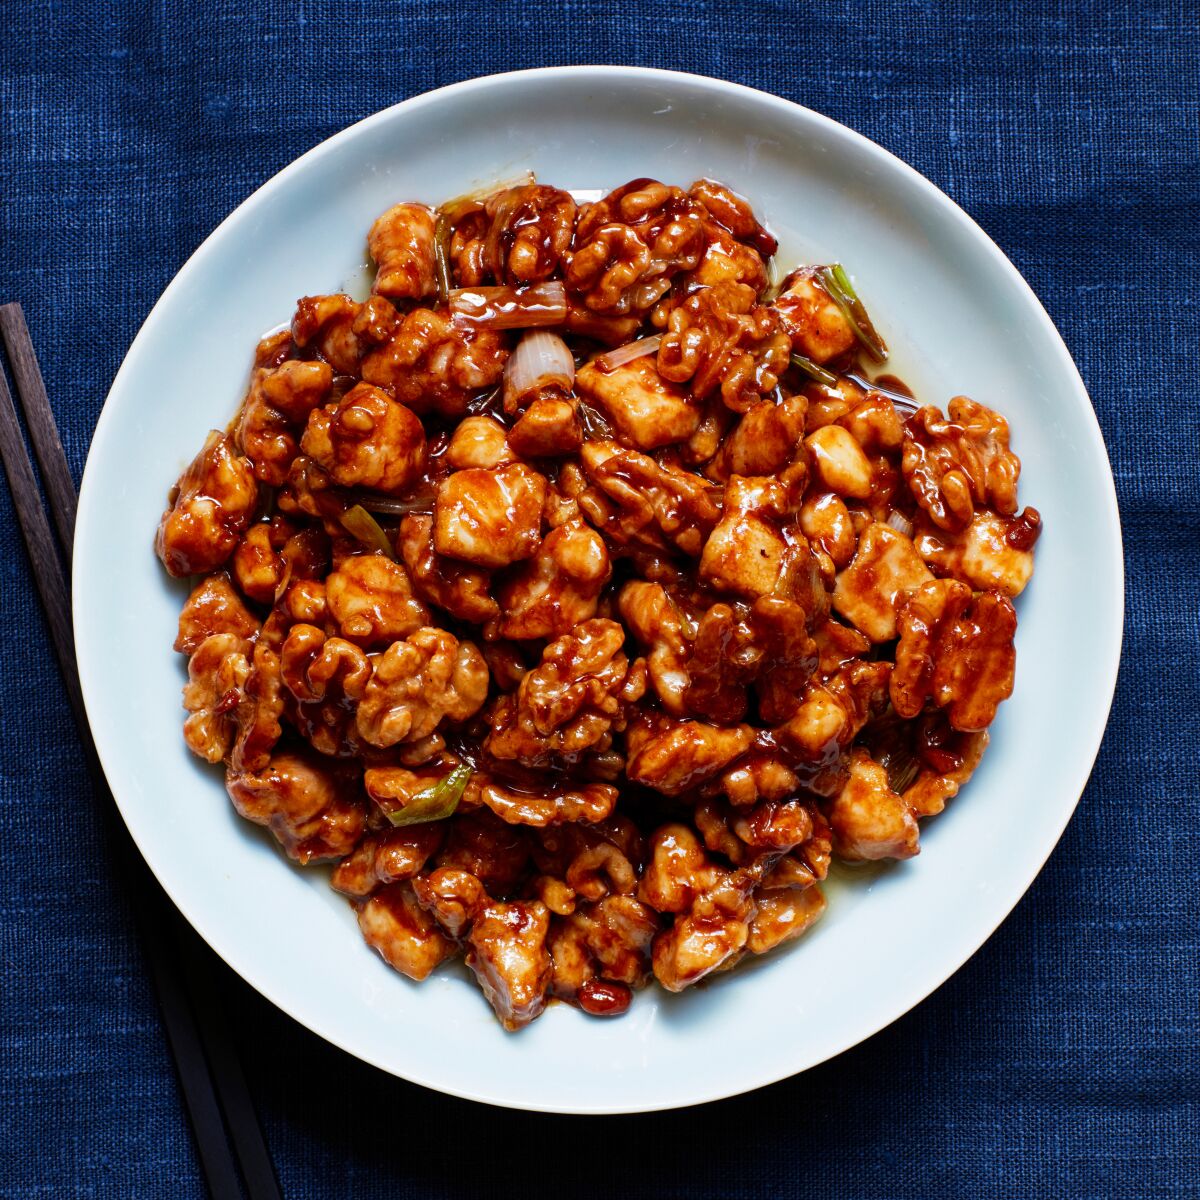 Shandong stir-fried chicken with walnuts